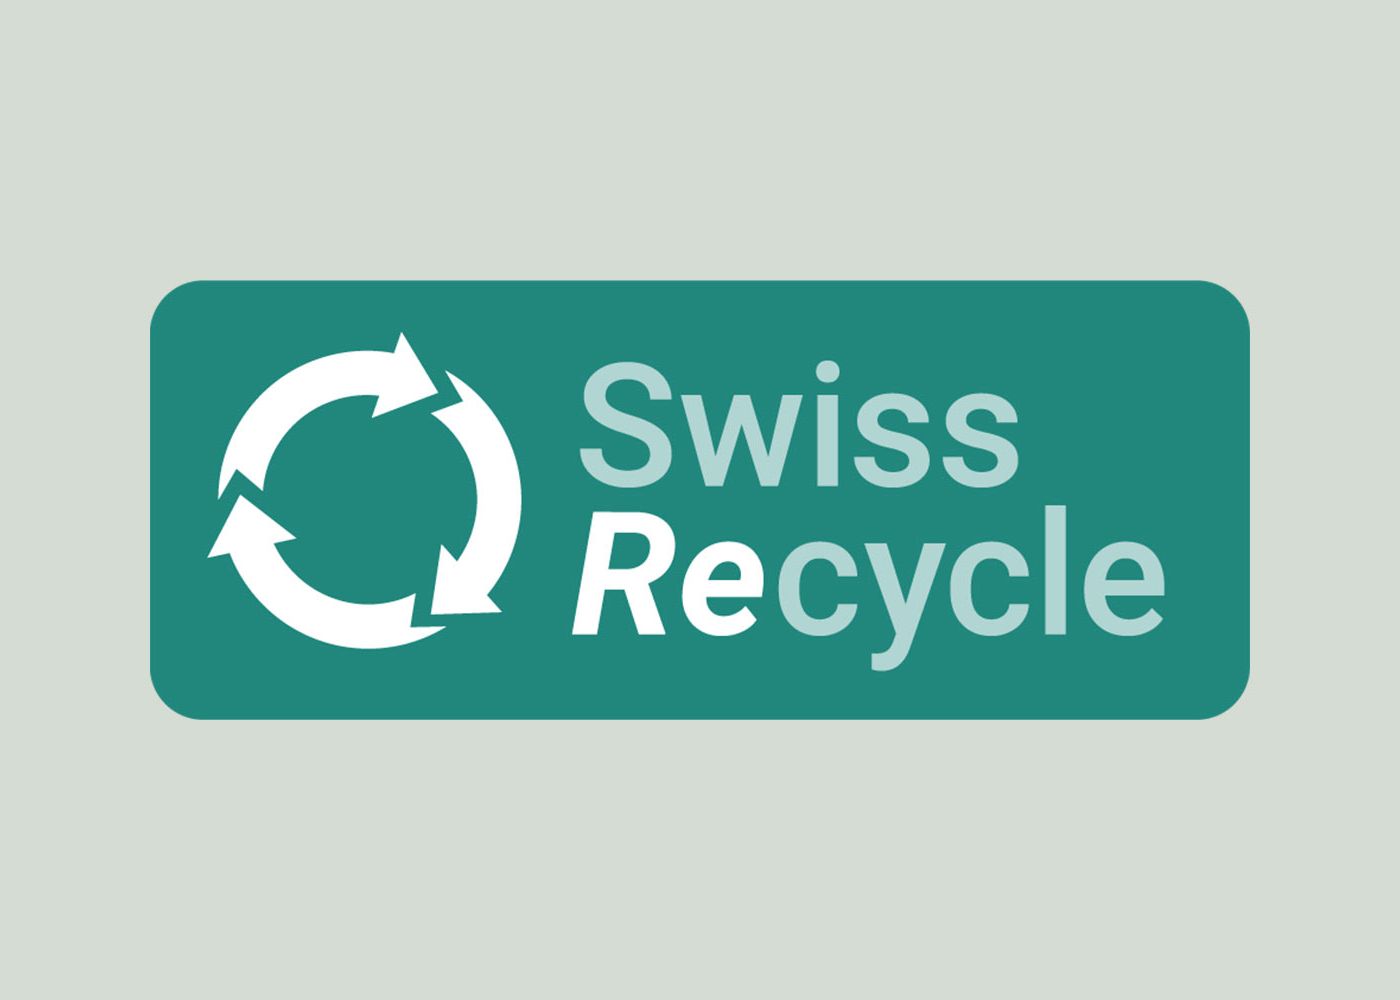 Aus Swiss Recycling wird Swiss Recycle